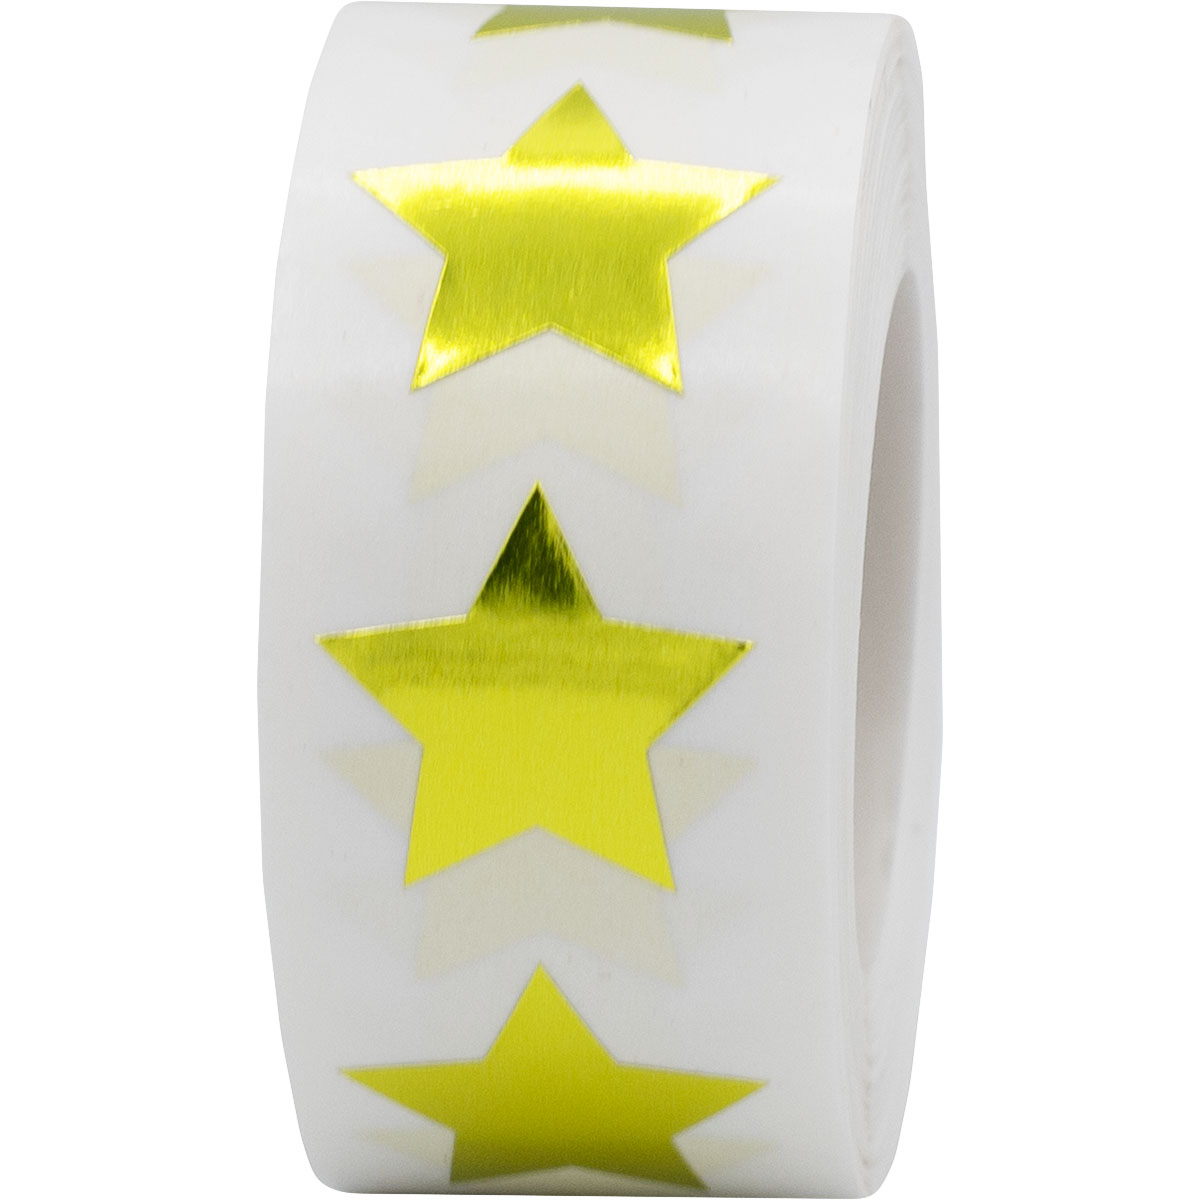 gold star sticker pack Sticker for Sale by tessa-stark